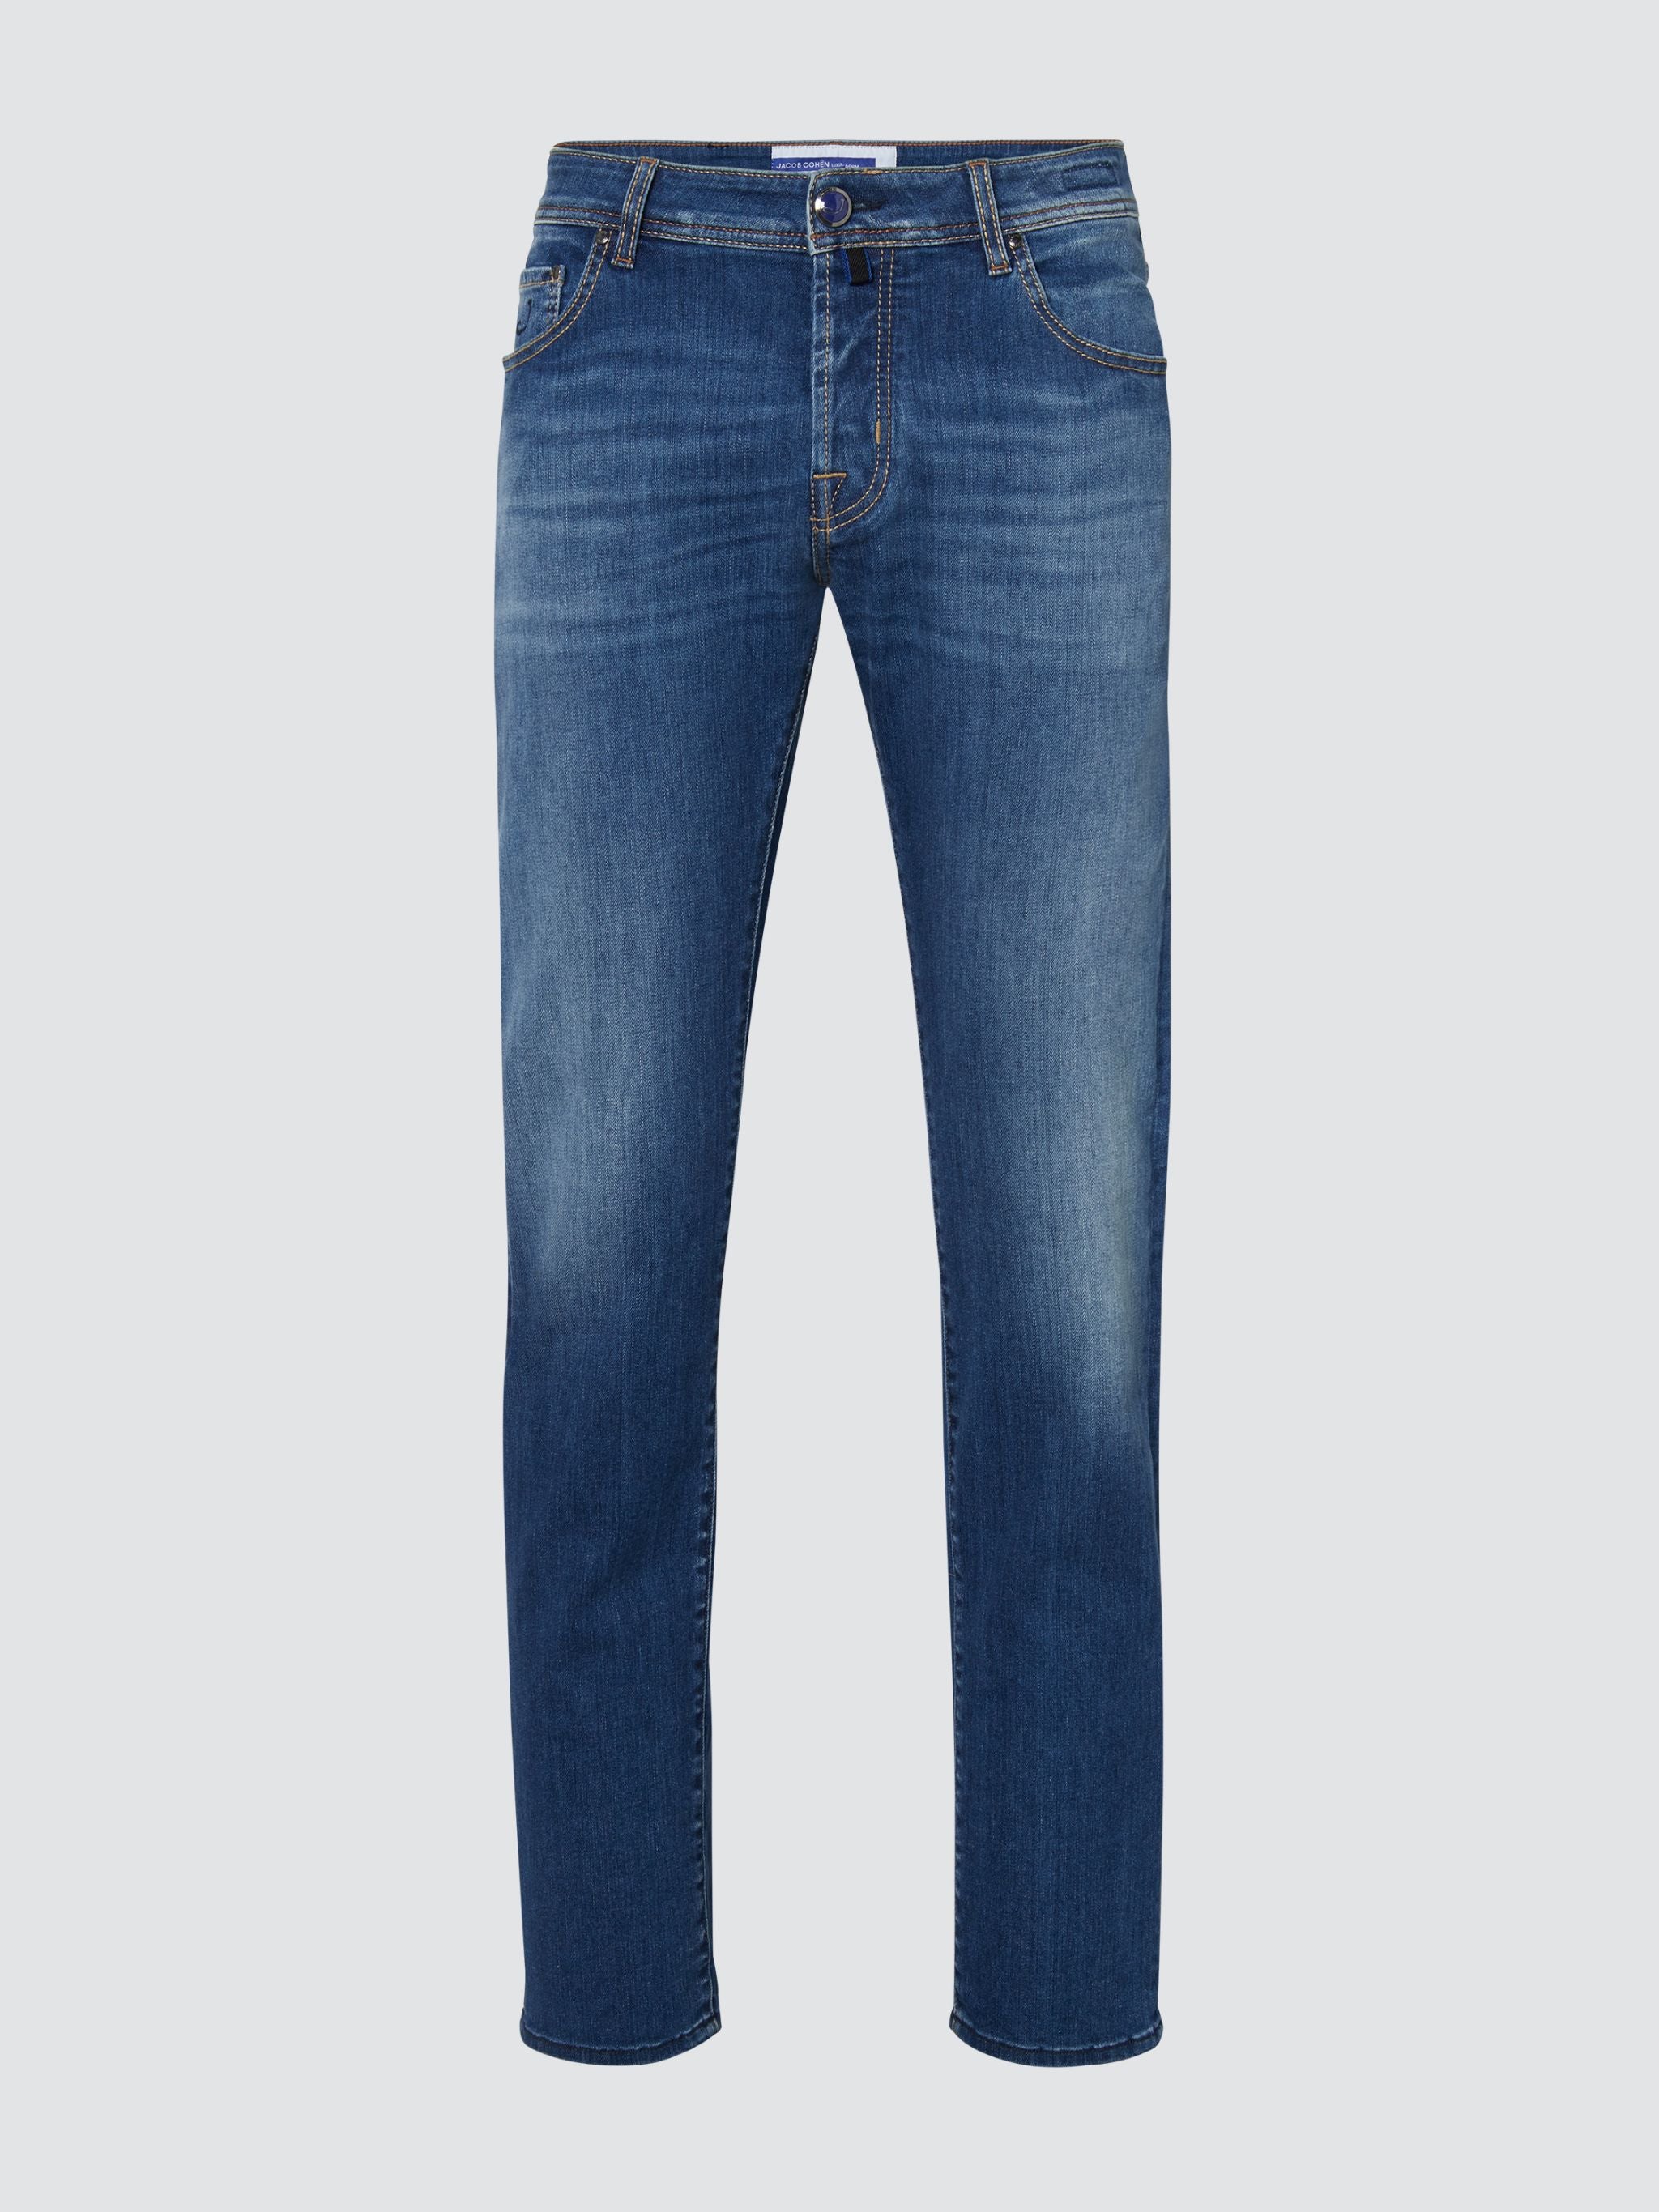 Jacob Cohën jeans blauw 561D